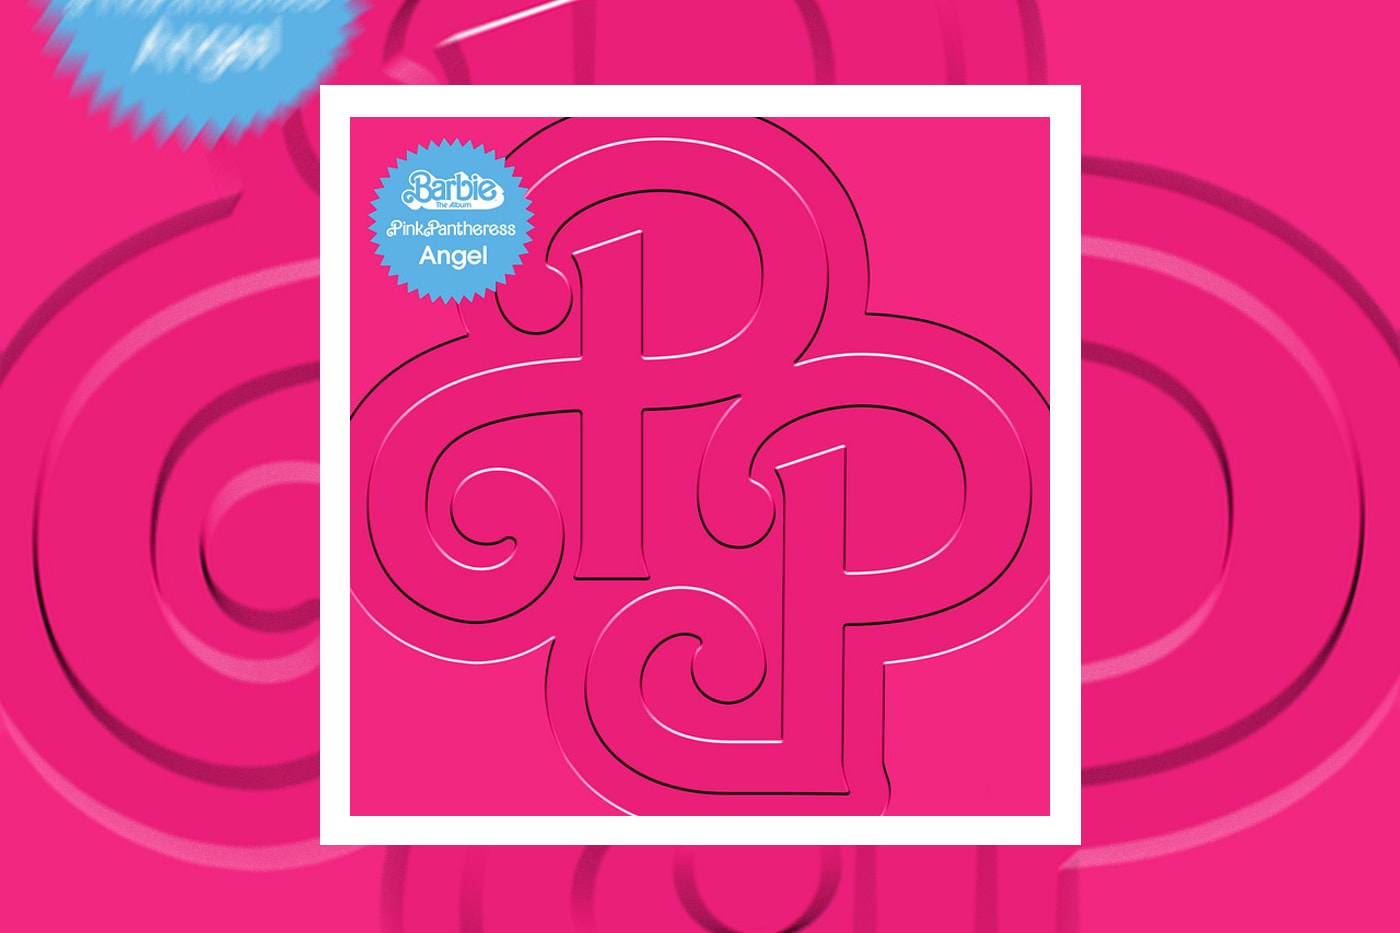 PinkPantheress Angel Single Stream barbie soundtrack album